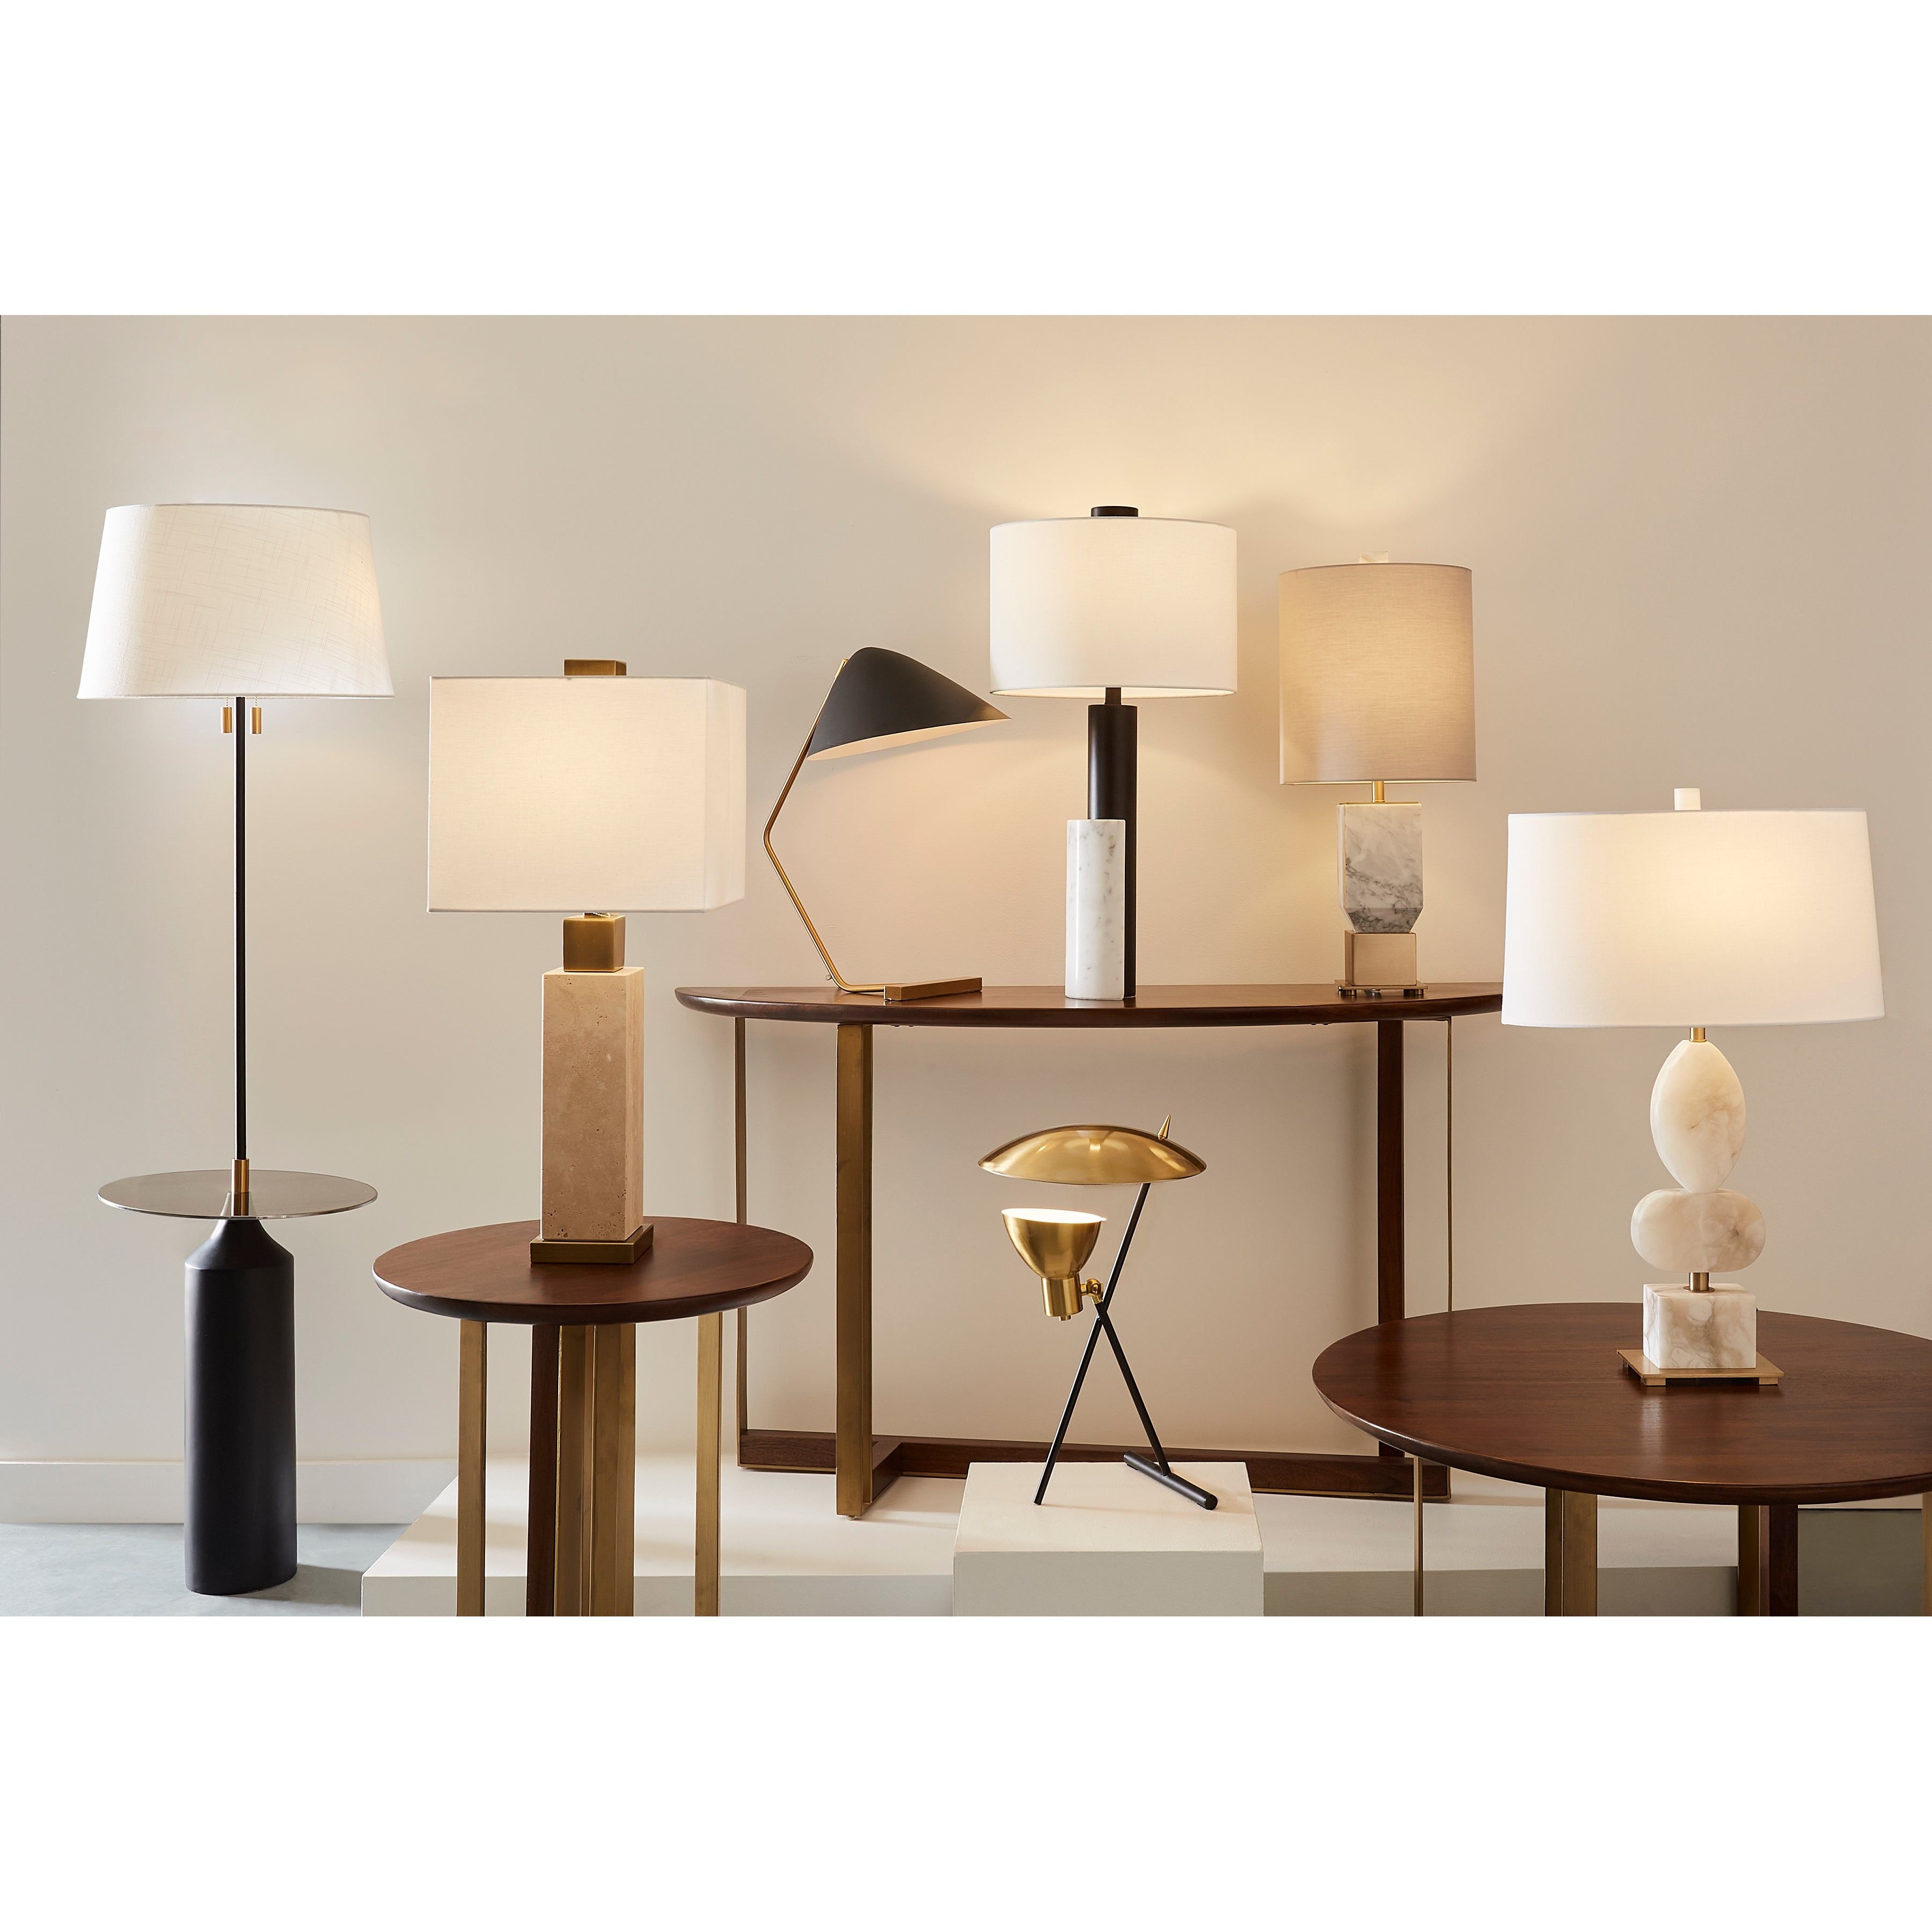 Touchstone 27" High 1-Light Table Lamp